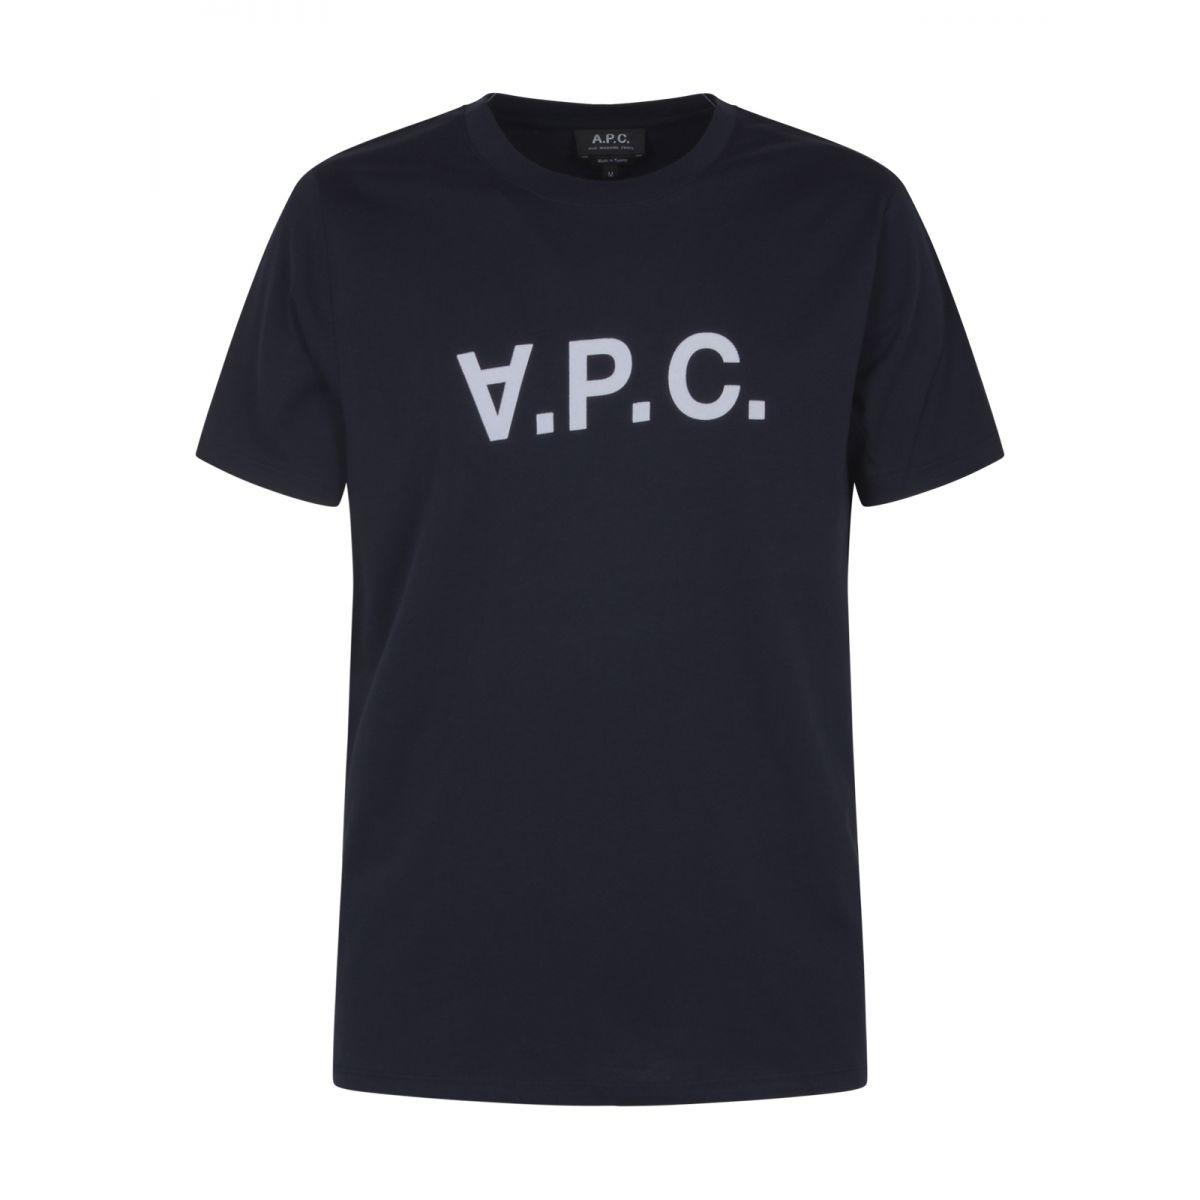 A.P.C - Logo print t-shirt